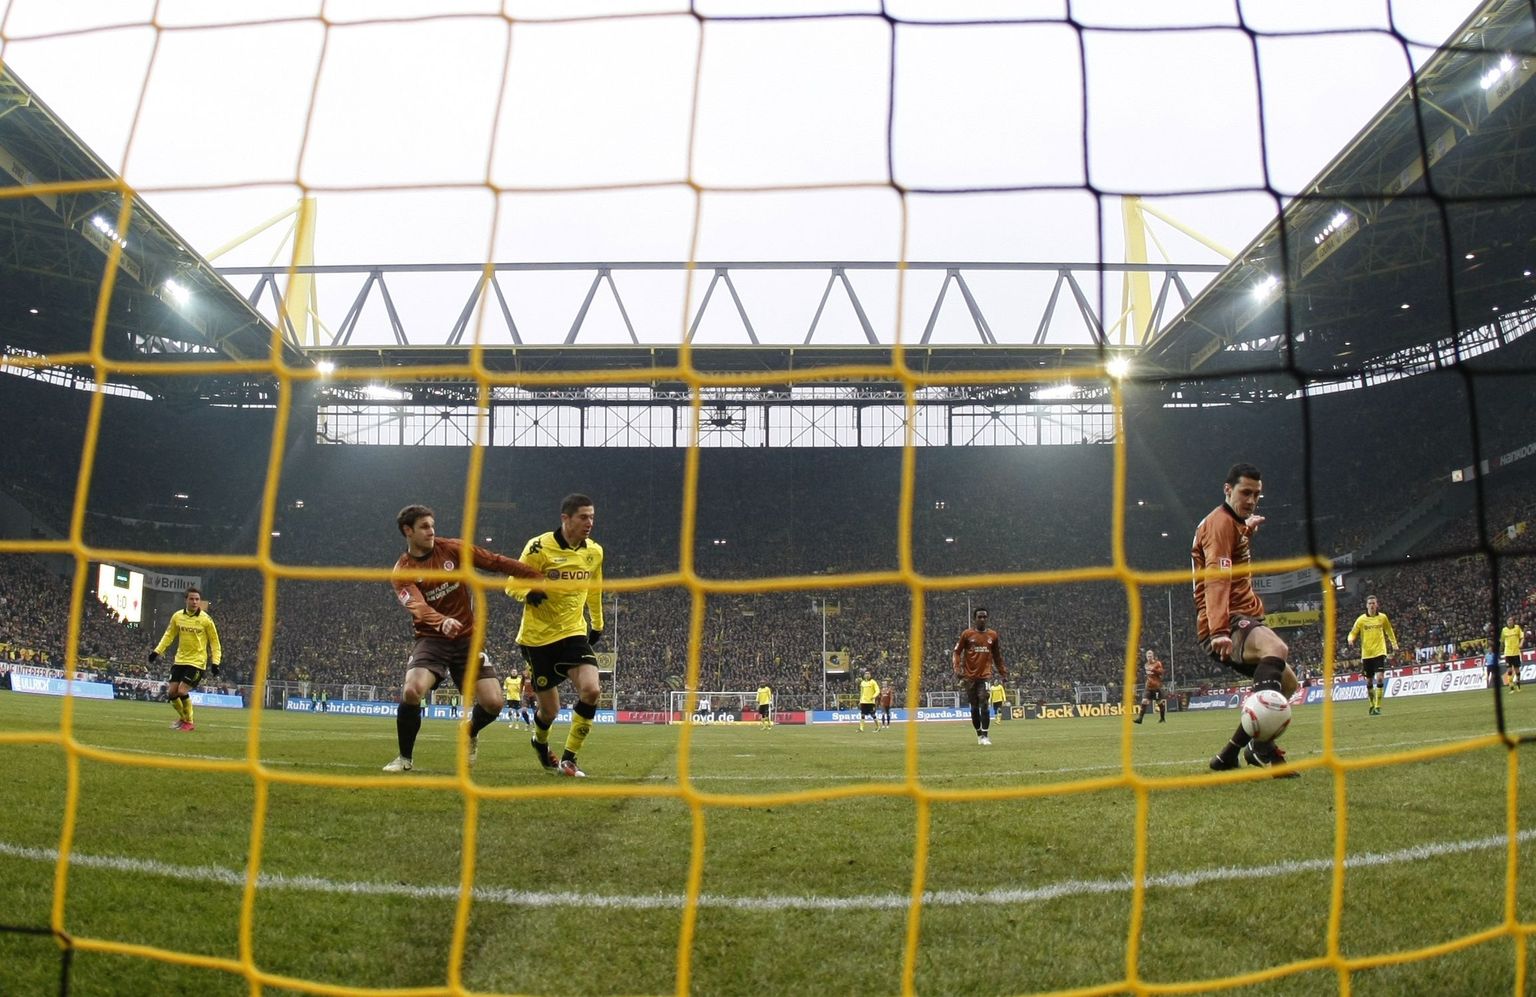 Dortmundi Borussia kodustaadion.